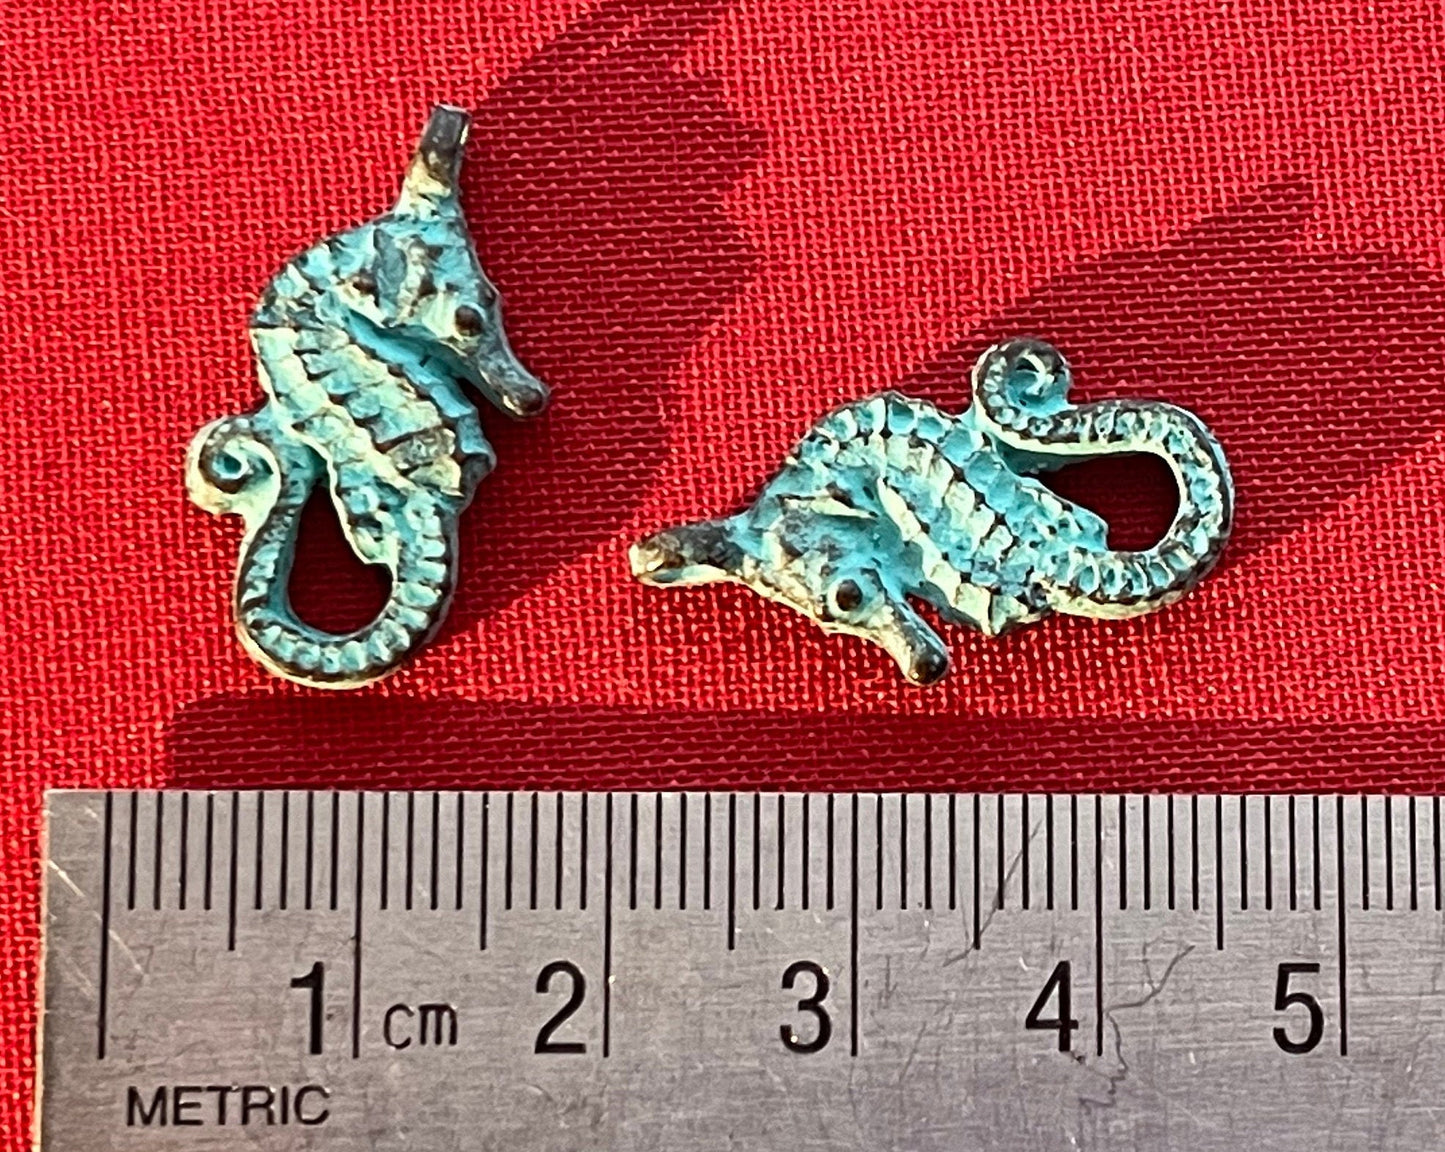 Seahorse copper charm or pendant (3D) –choose 1, 3 or 6 – green patina PREMIUM quality from Mykonos island, Greece – beach nautical sea life